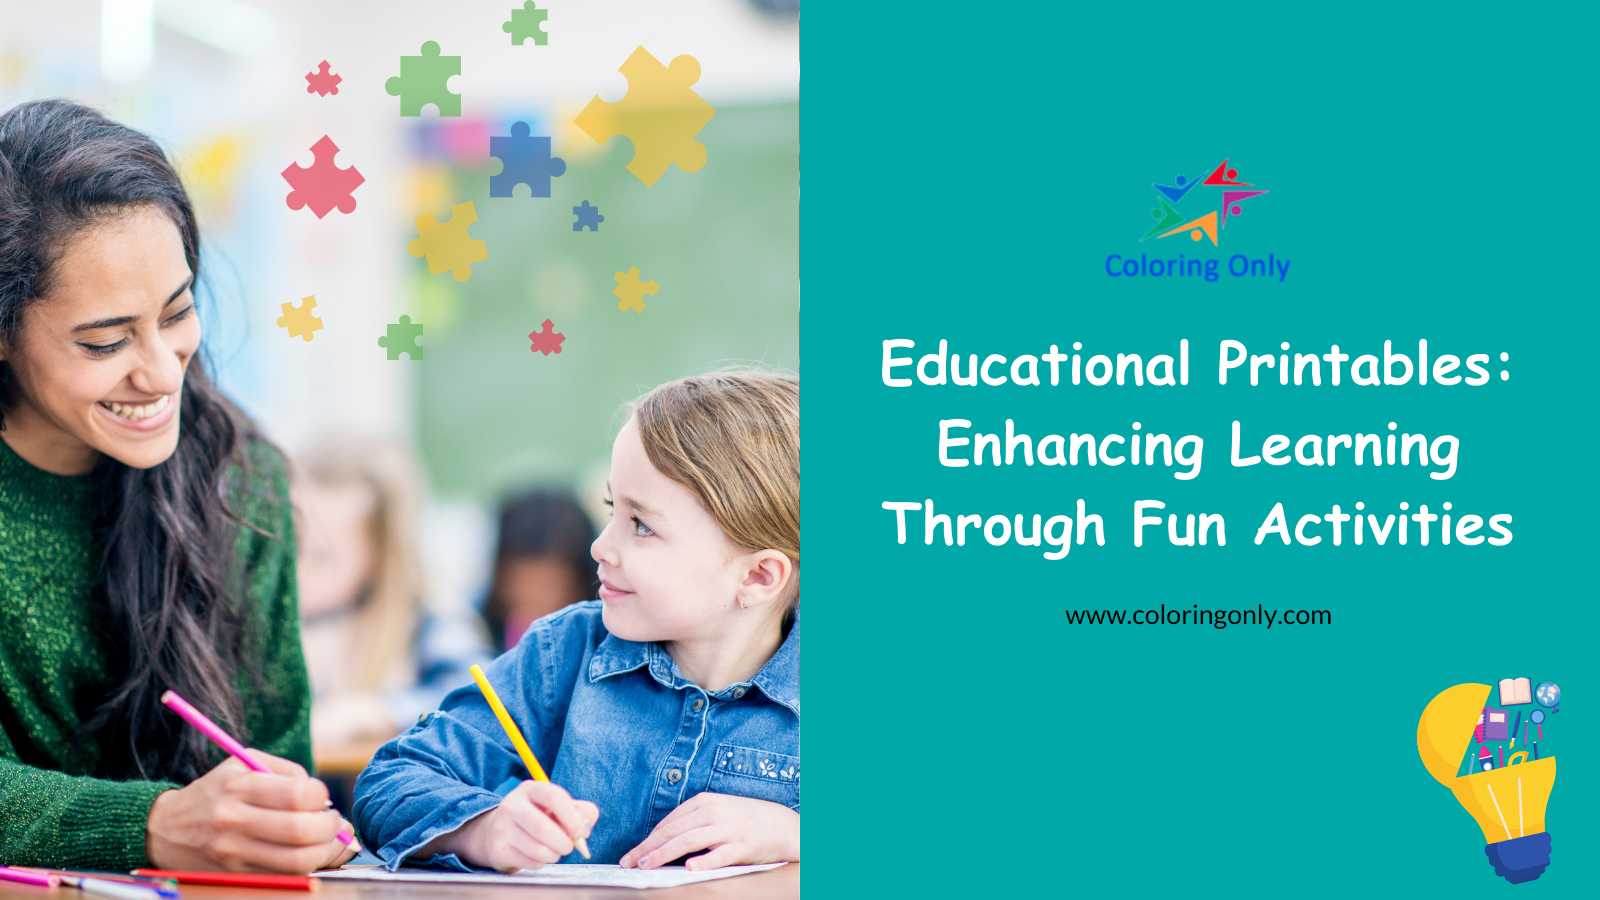 Educational Printables: Enhancing Learning Through Fun Activities